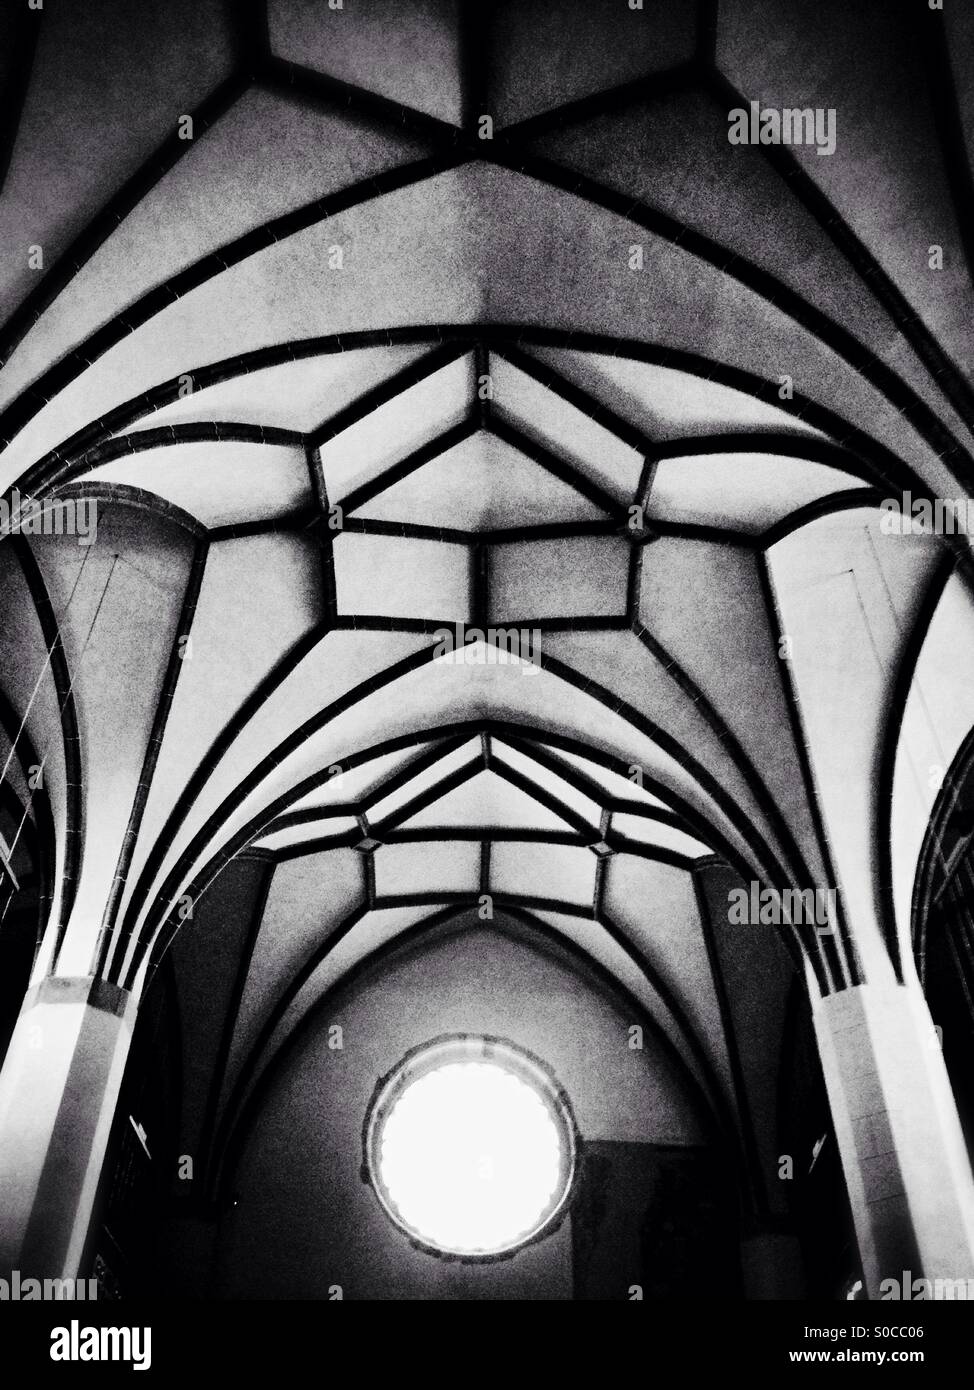 La arquitectura gótica de la iglesia de los Capuchinos, Bolzano, Italia Foto de stock